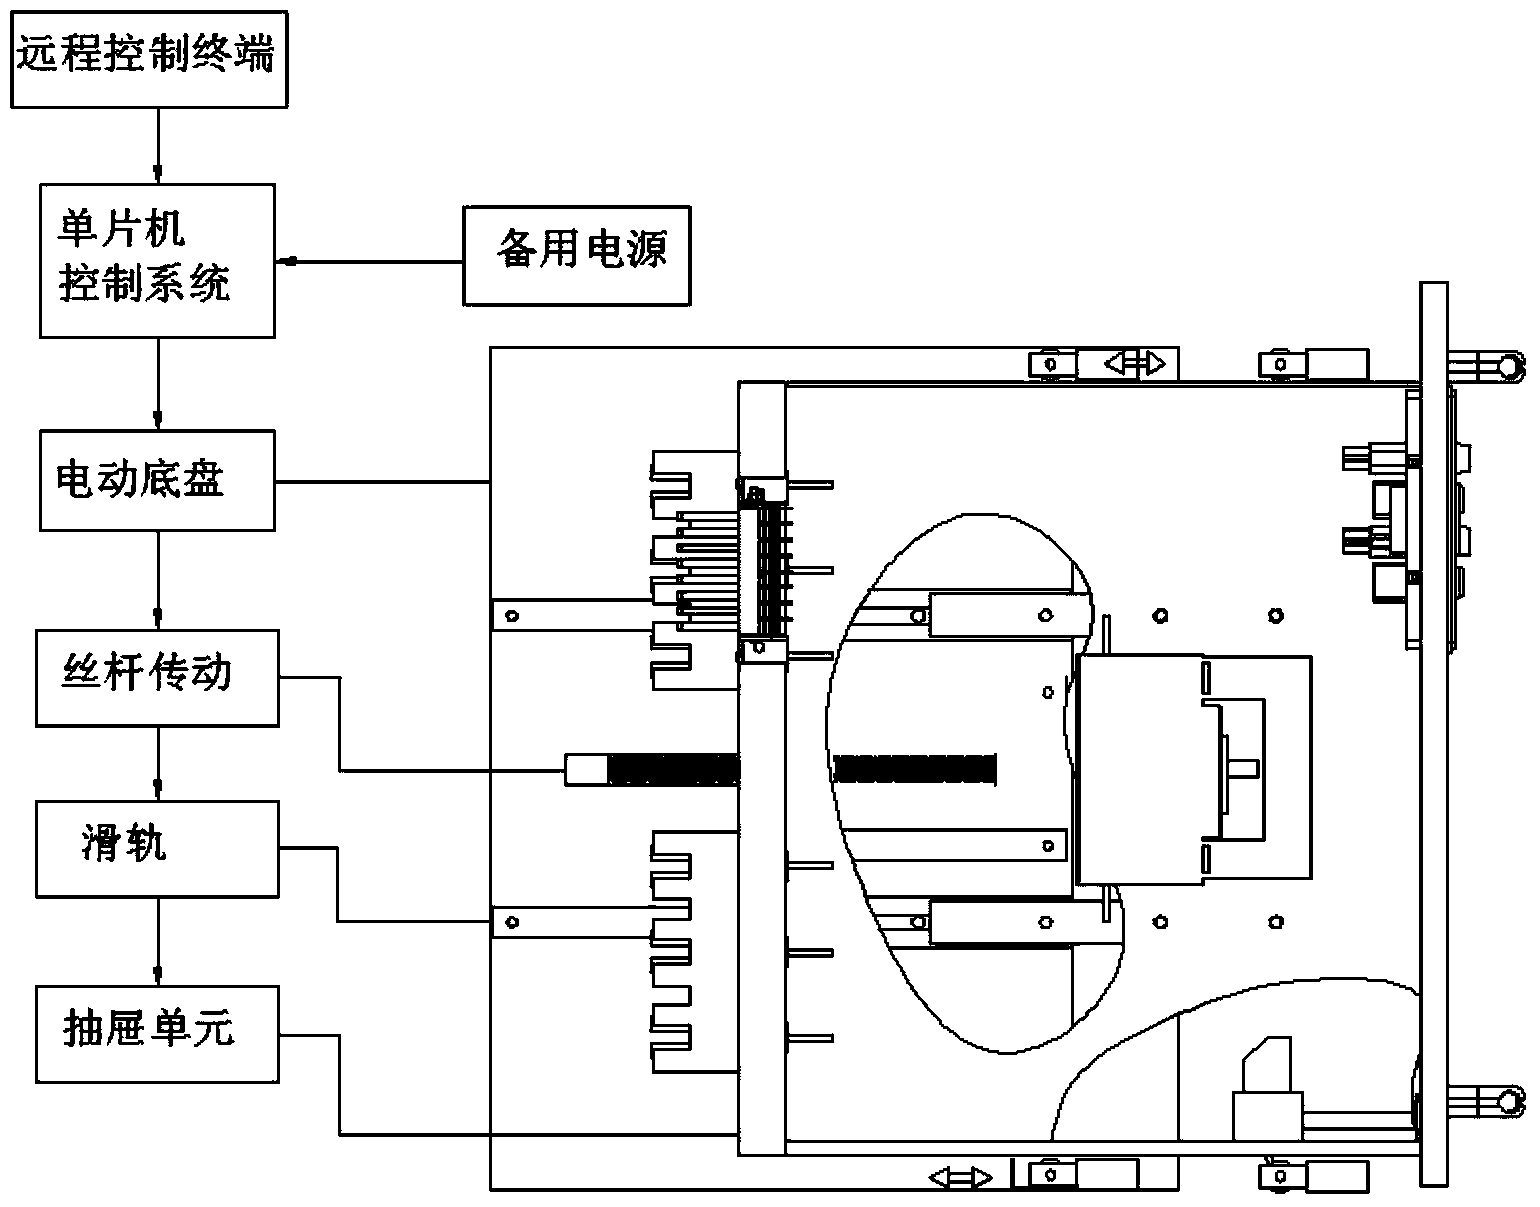 Control method of intelligent low-pressure drawer unit system